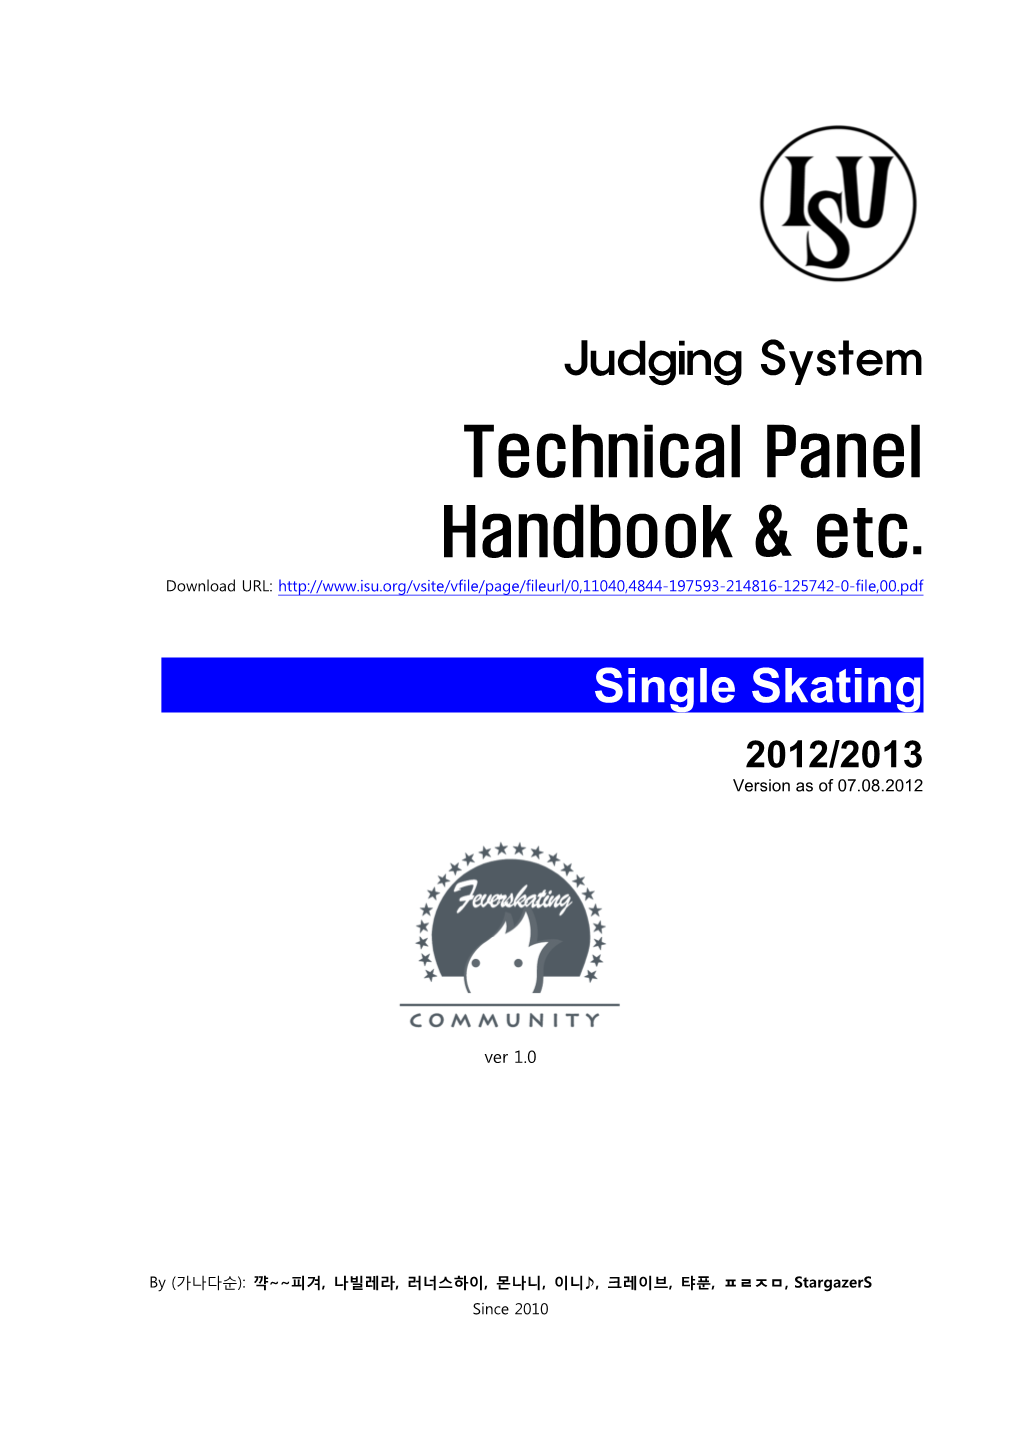 Technical Panel Handbook & Etc